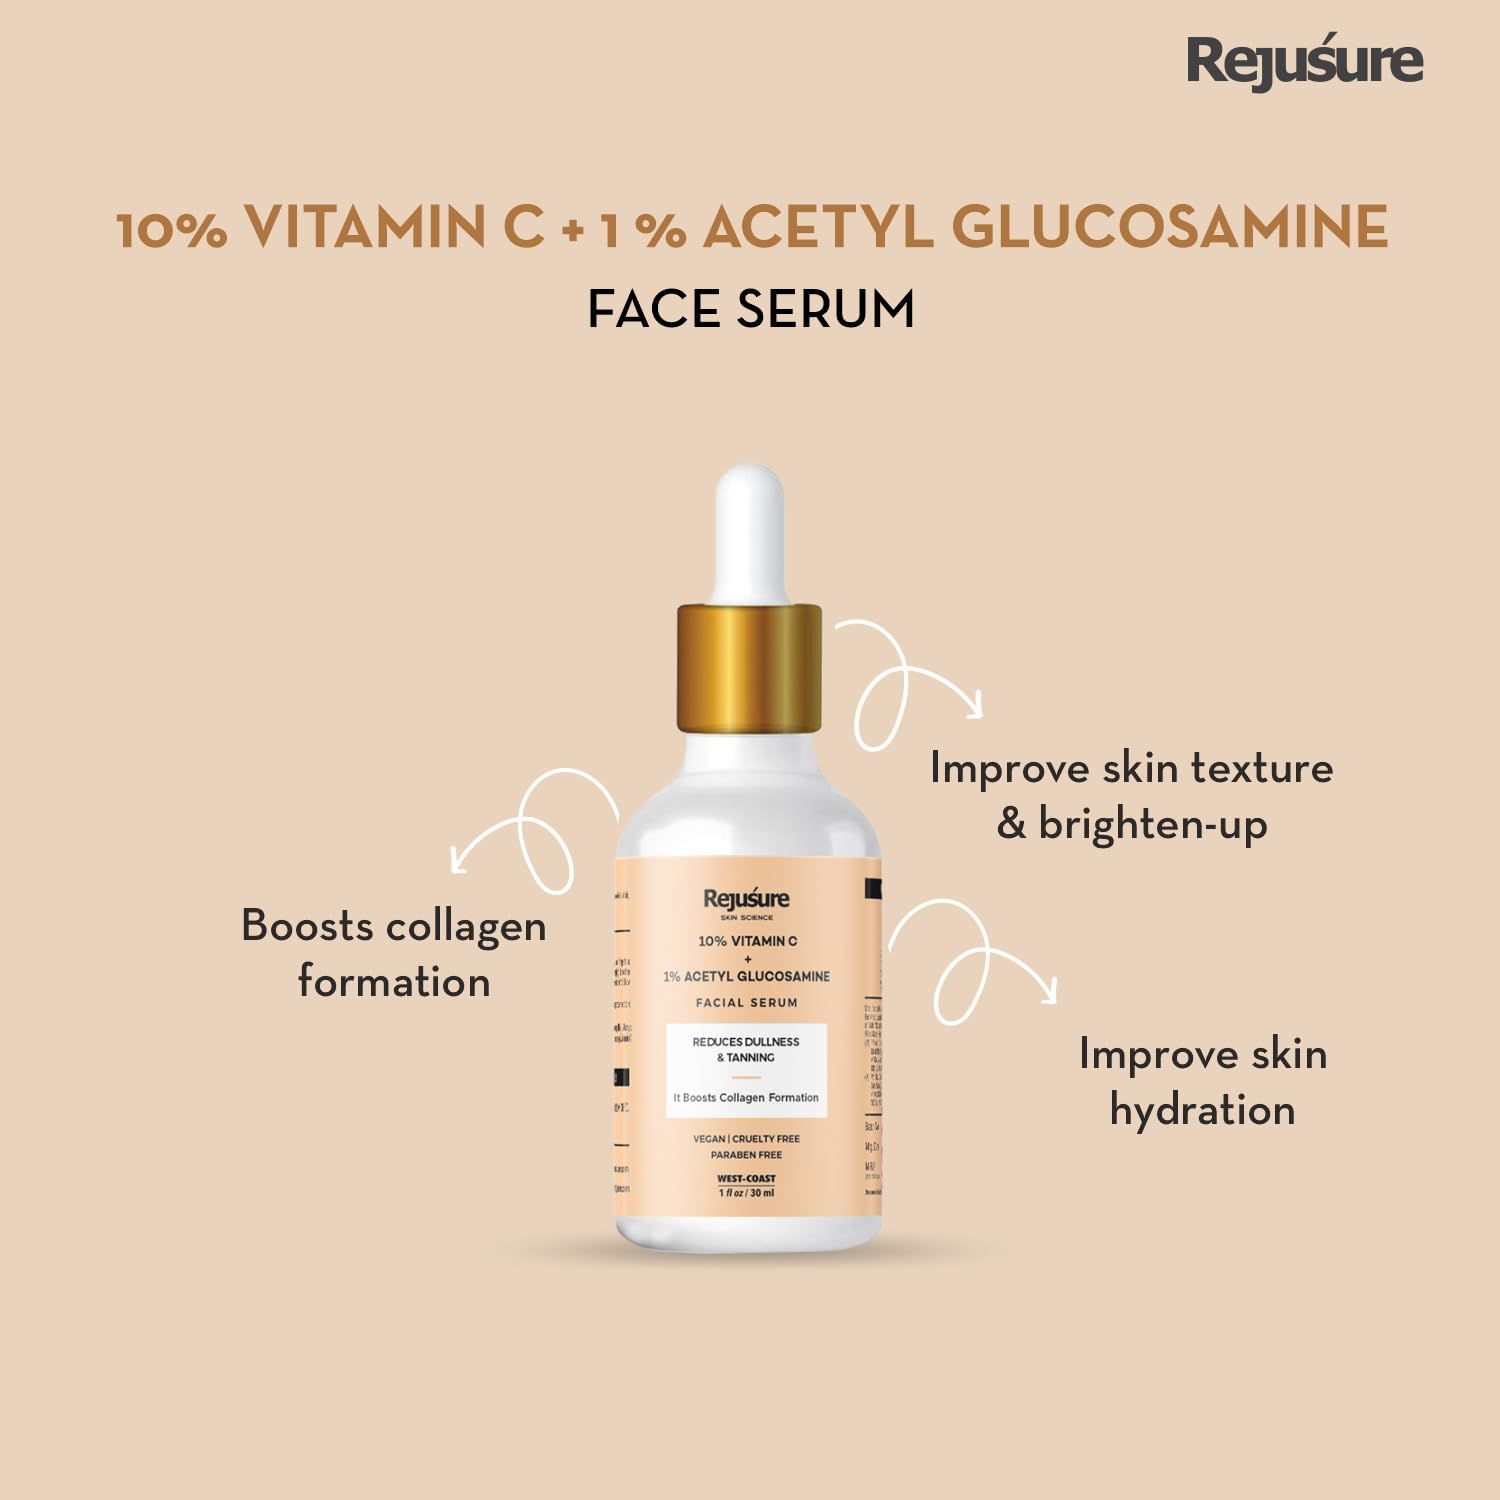 Rejusure Skin Brightening Duo | 5% Niacinamide Facial Serum (30ml) & 10% Vitamin C + 1% Acetyl Glucosamine Facial Serum (30ml) - Radiant Complexion and Even Skin Tone